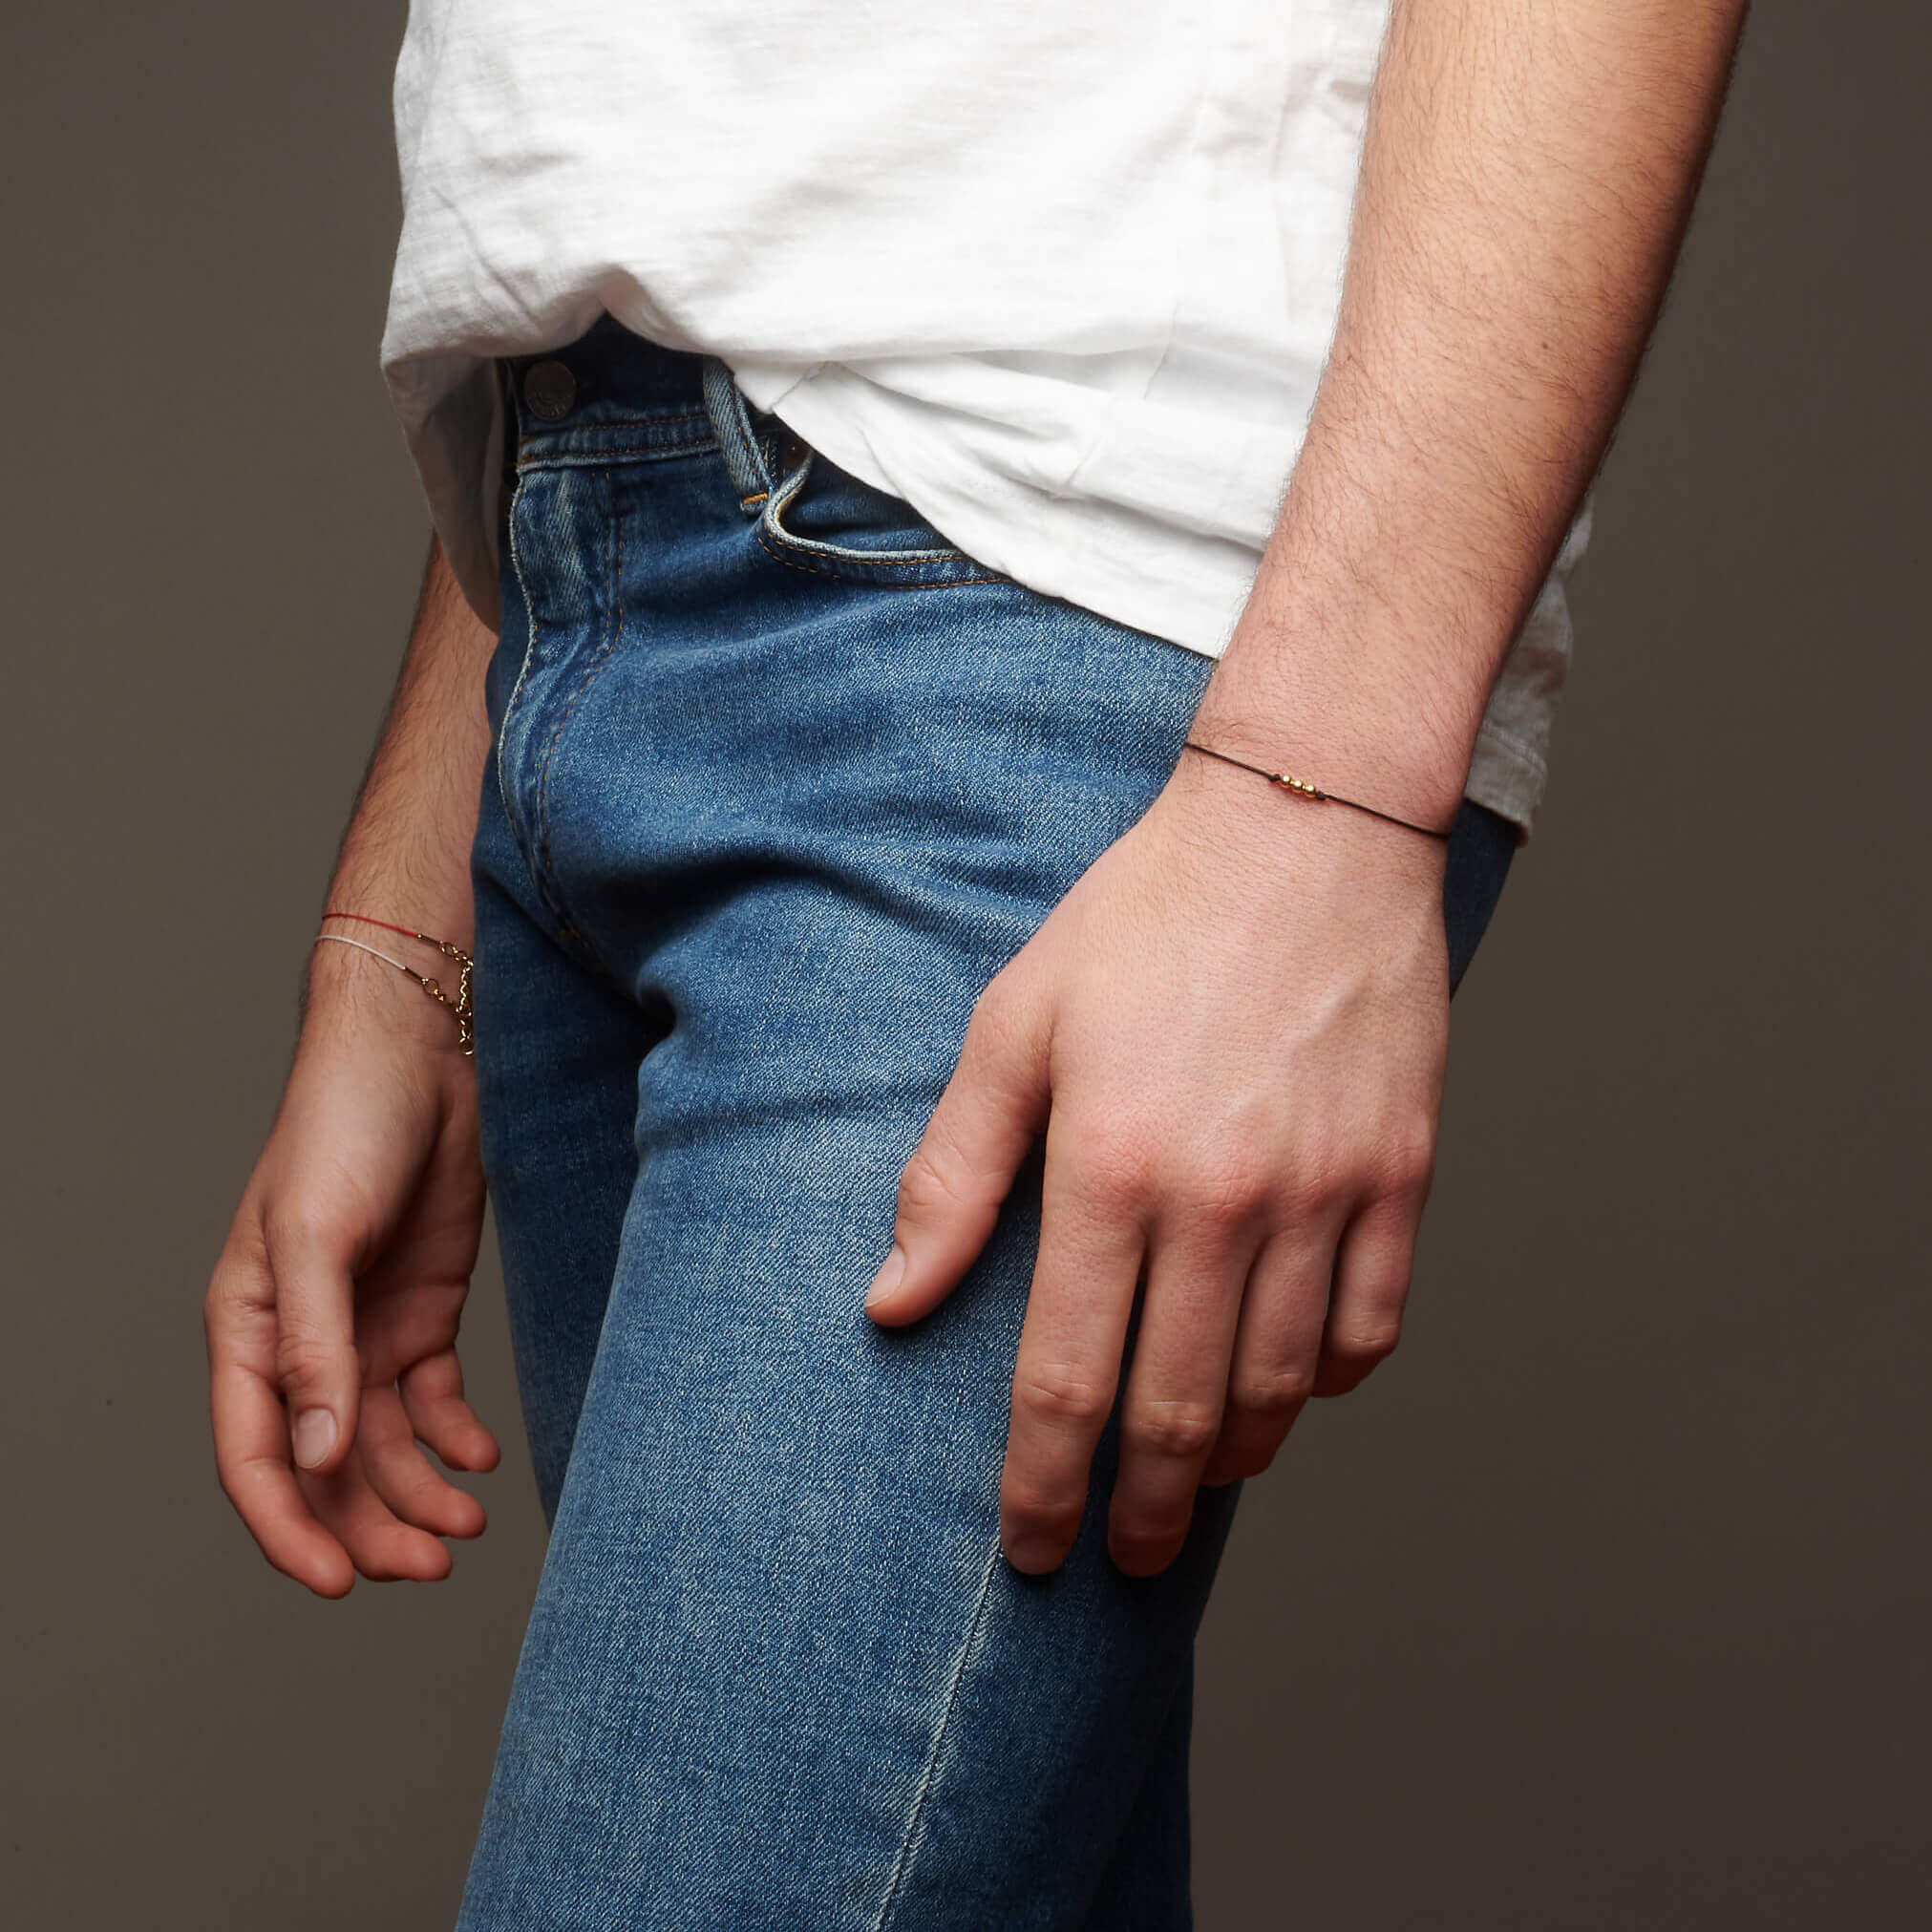 Hands hanging by sides showing sting bracelet on wrist